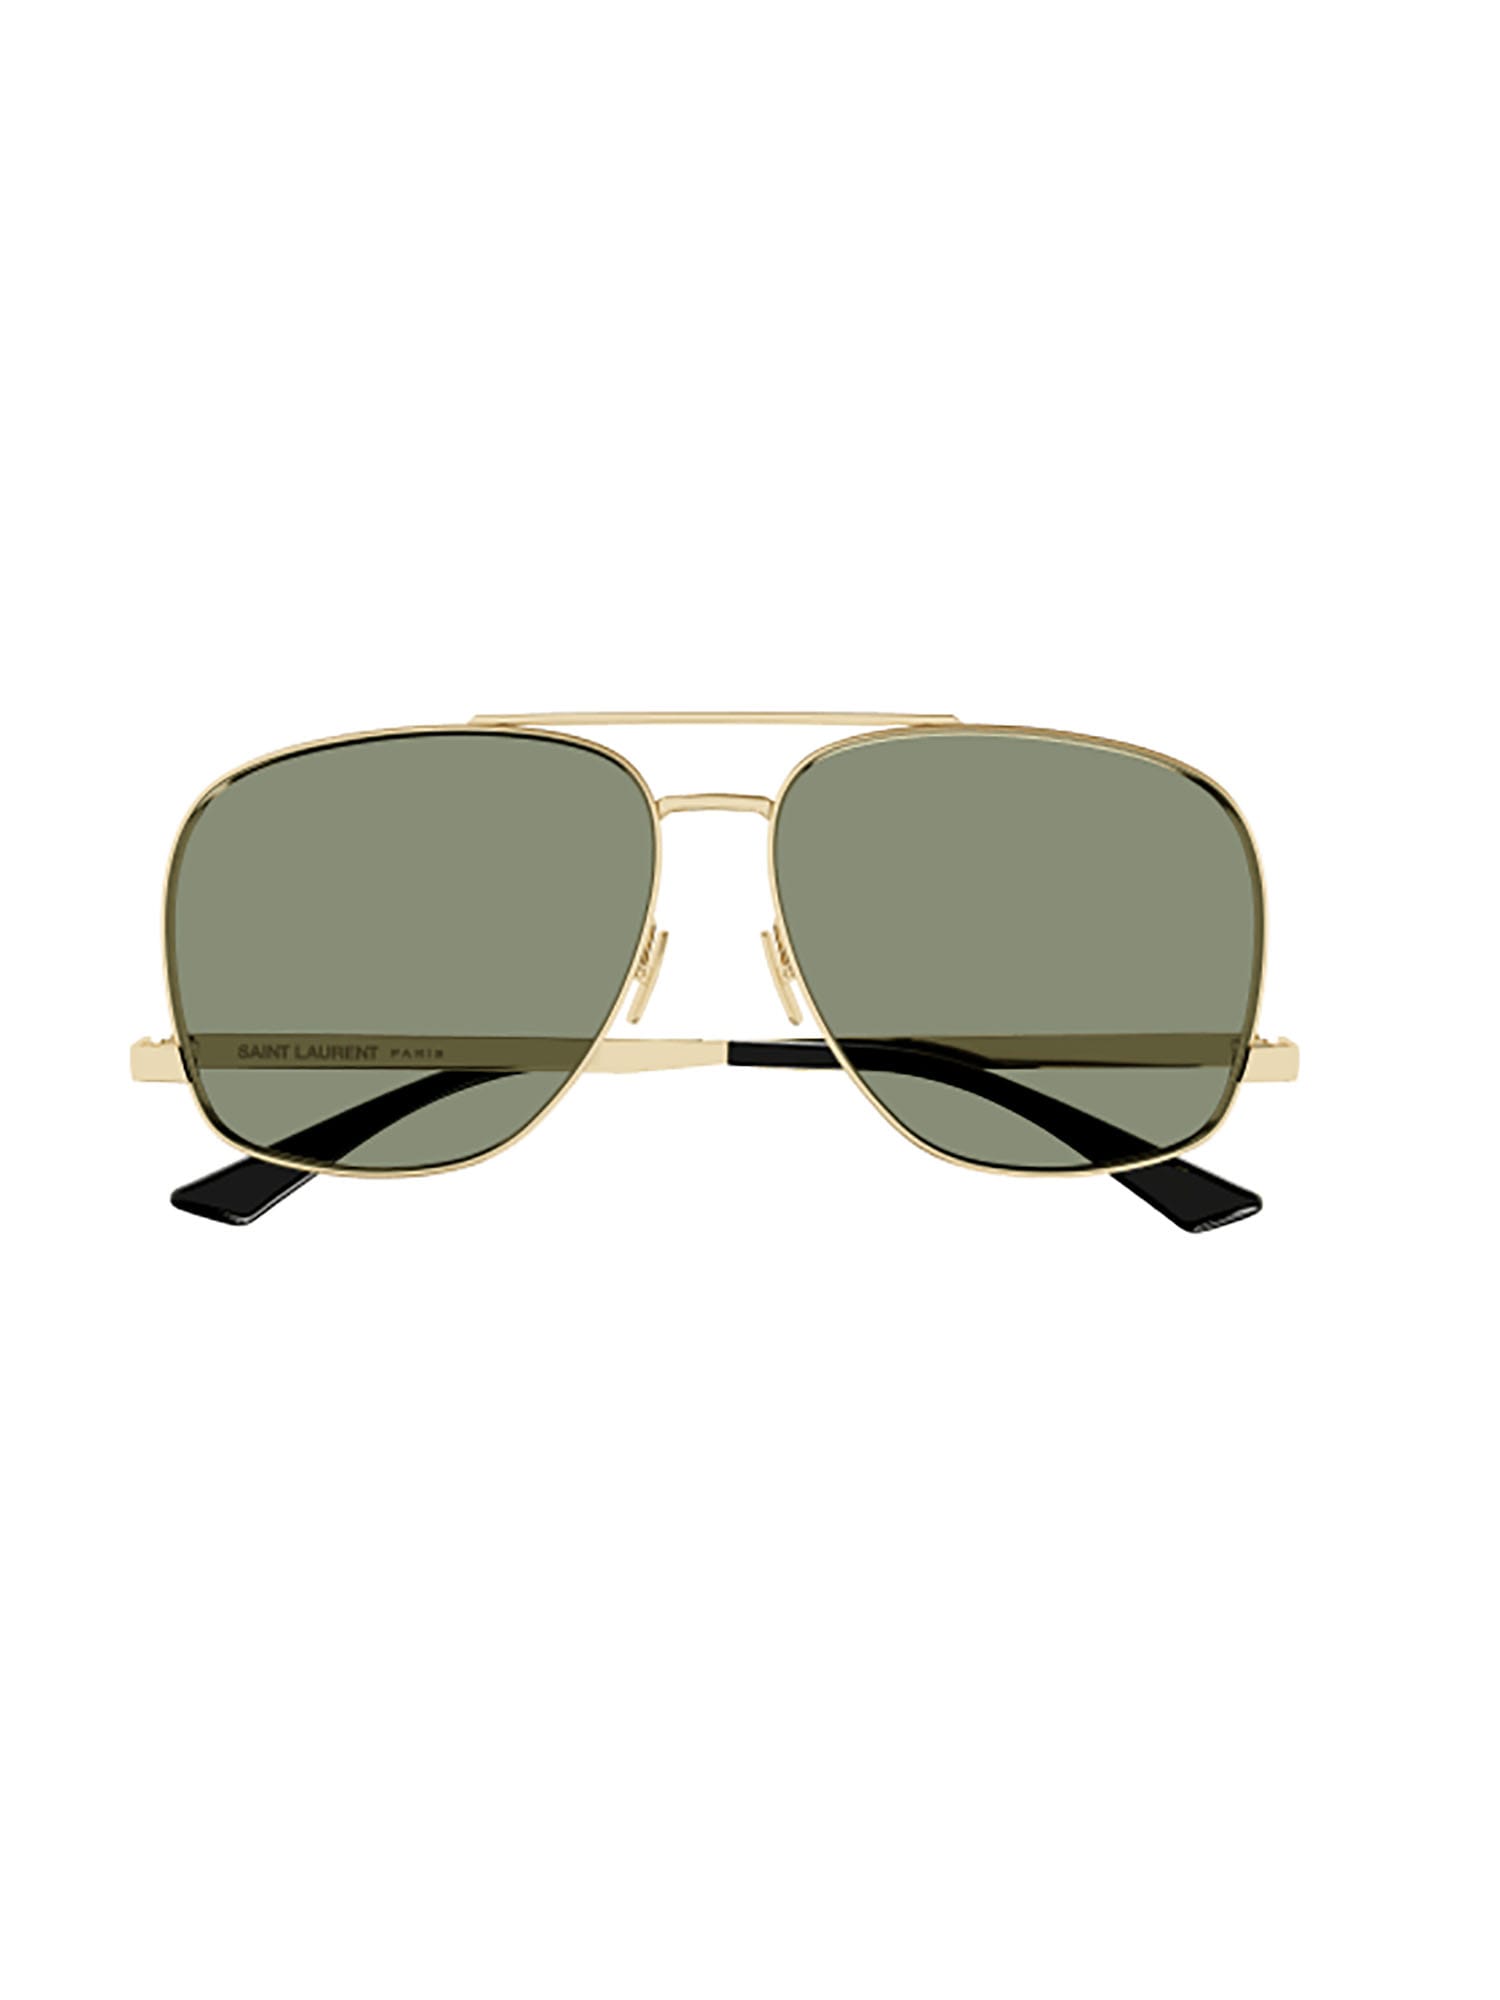 Saint Laurent Sl 653 Leon Sunglasses In Gold Gold Green